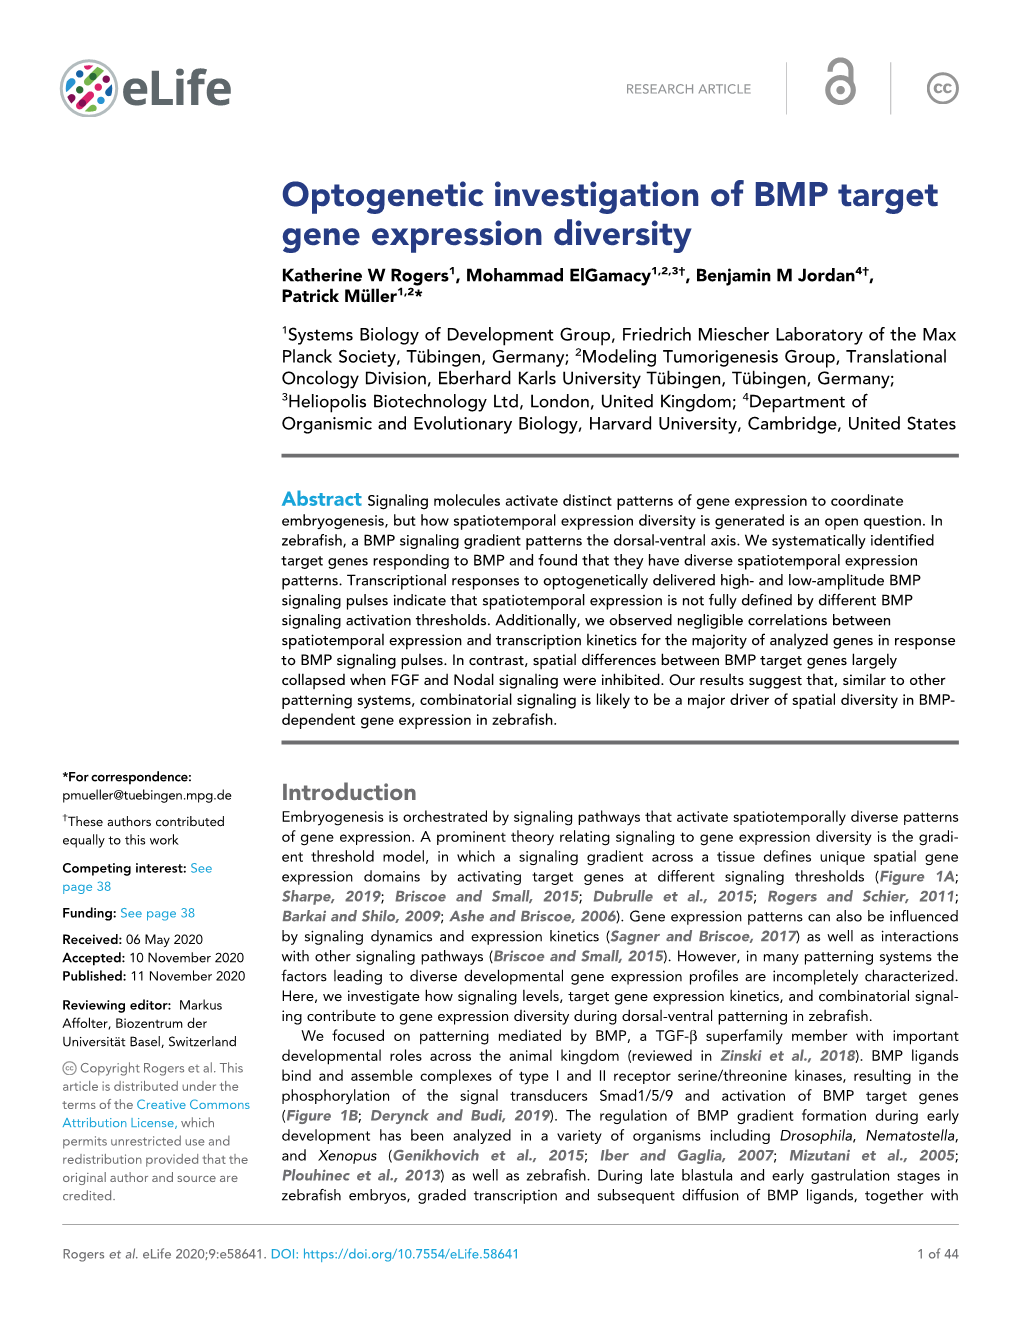 Optogenetic Investigation of BMP Target Gene Expression Diversity Katherine W Rogers1, Mohammad Elgamacy1,2,3†, Benjamin M Jordan4†, Patrick Mu¨ Ller1,2*